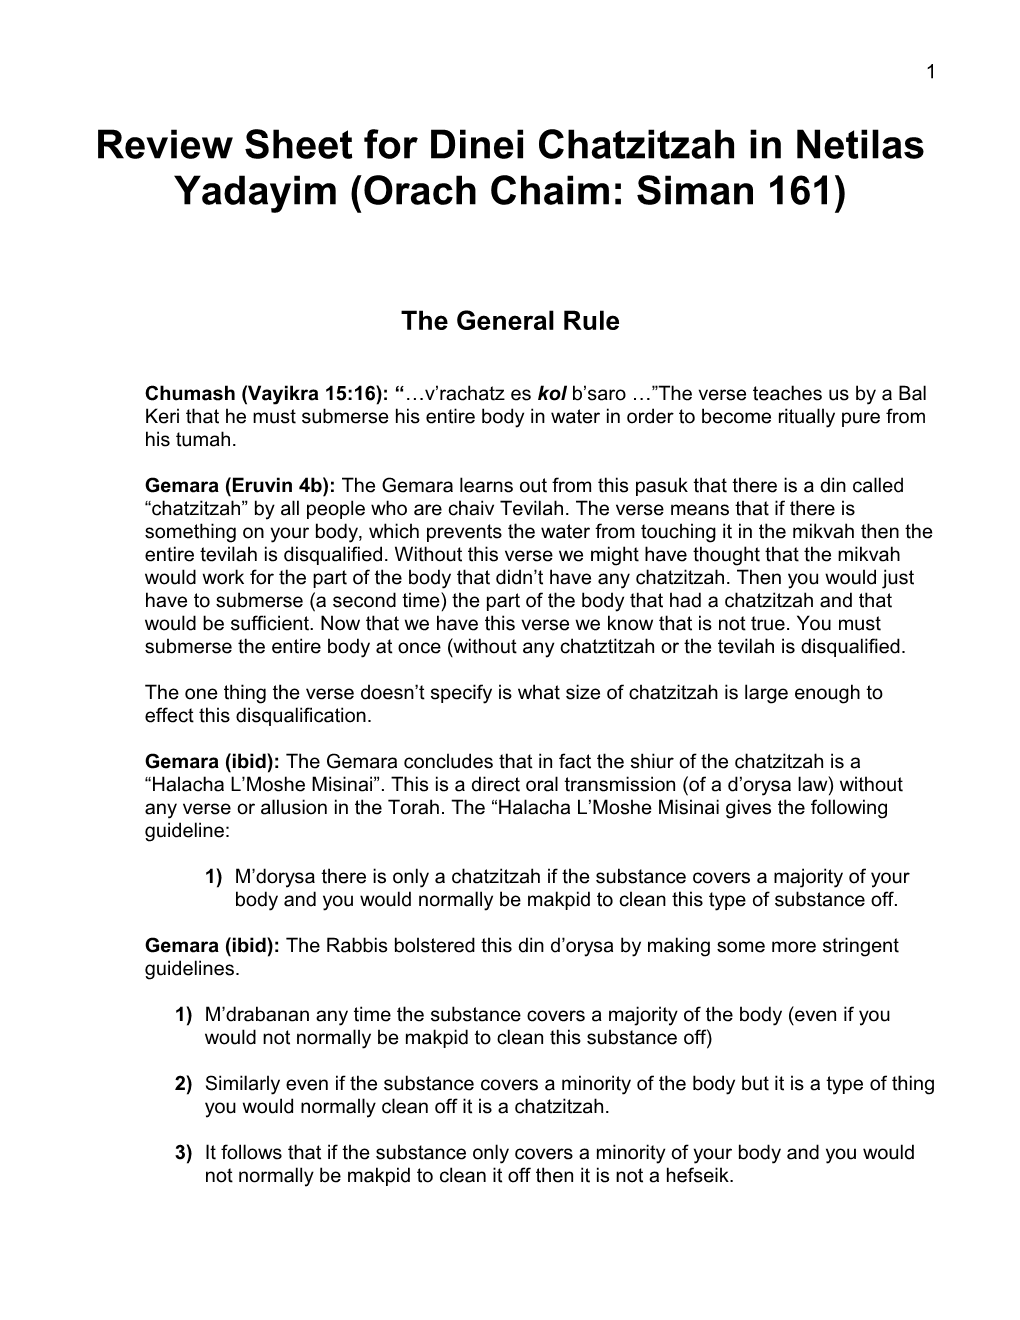 Review Sheet for Dinei Chatzitzah in Netilas Yadayim (Orach Chaim: Siman 161)